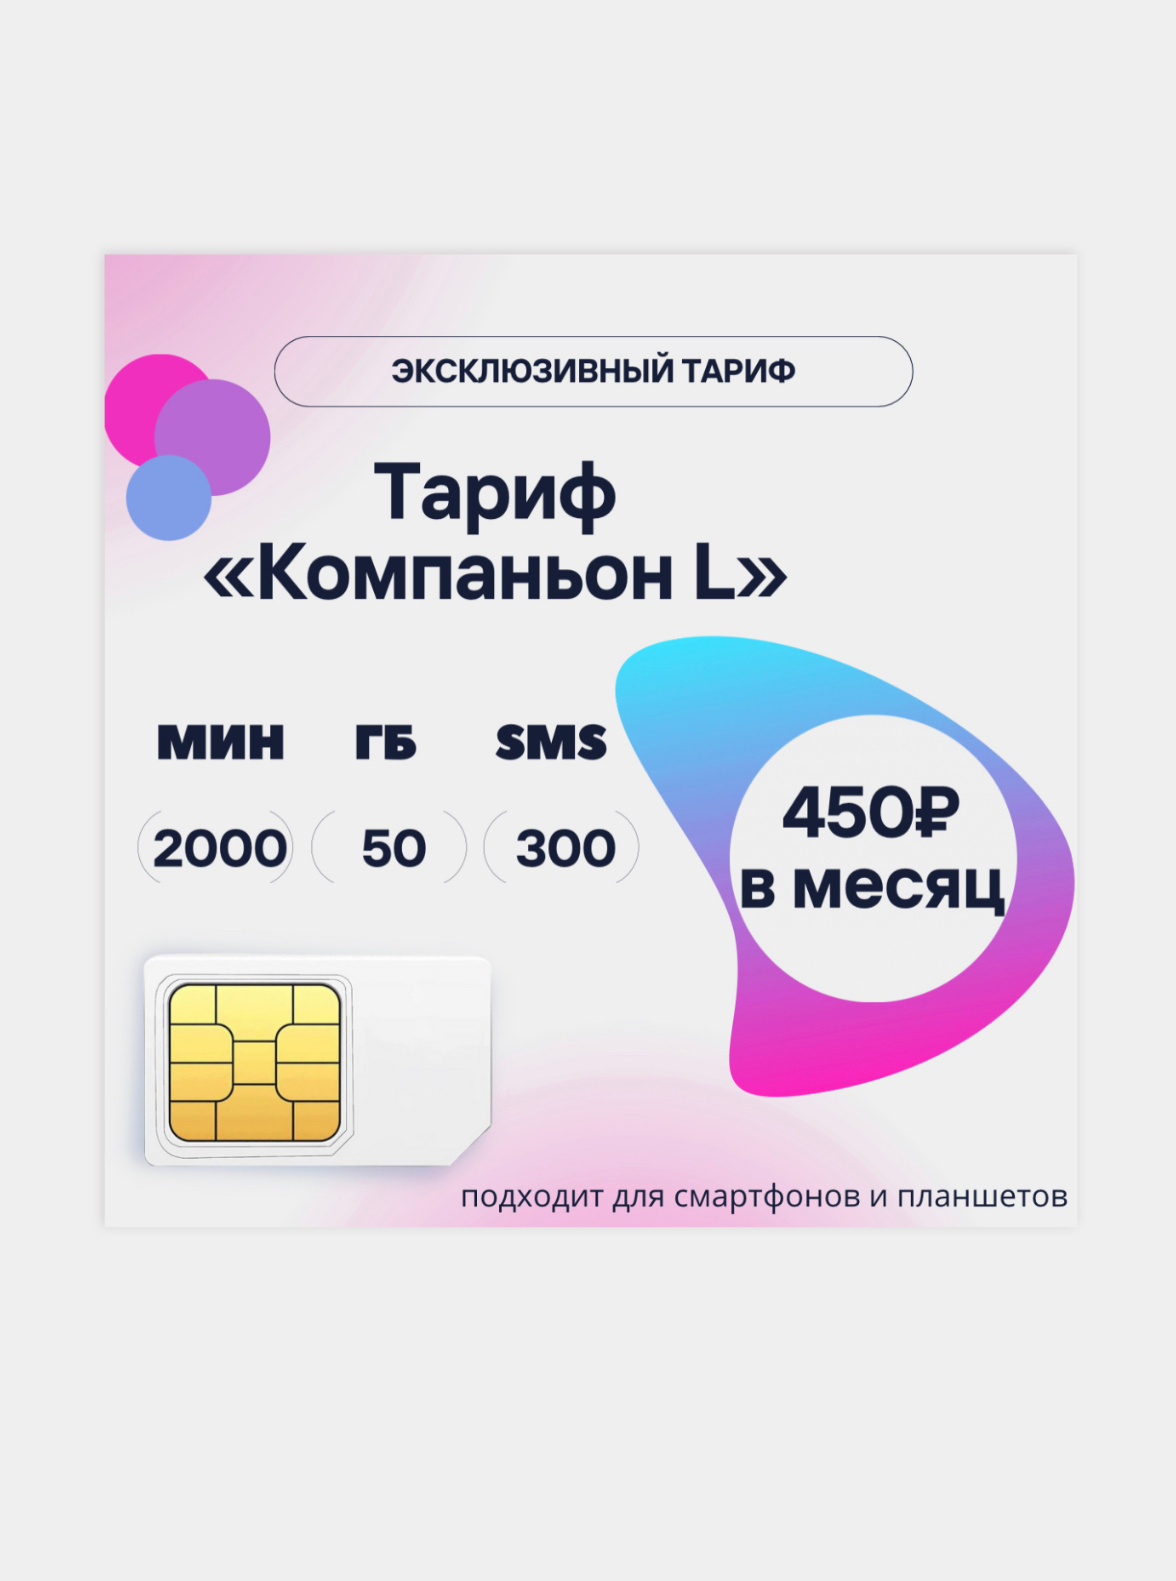 SIM-карта Теле2, безлимит внутри сети, 450 р/мес.,50 гб, 2000 мин, 300 смс  купить по цене 149 ₽ в интернет-магазине KazanExpress